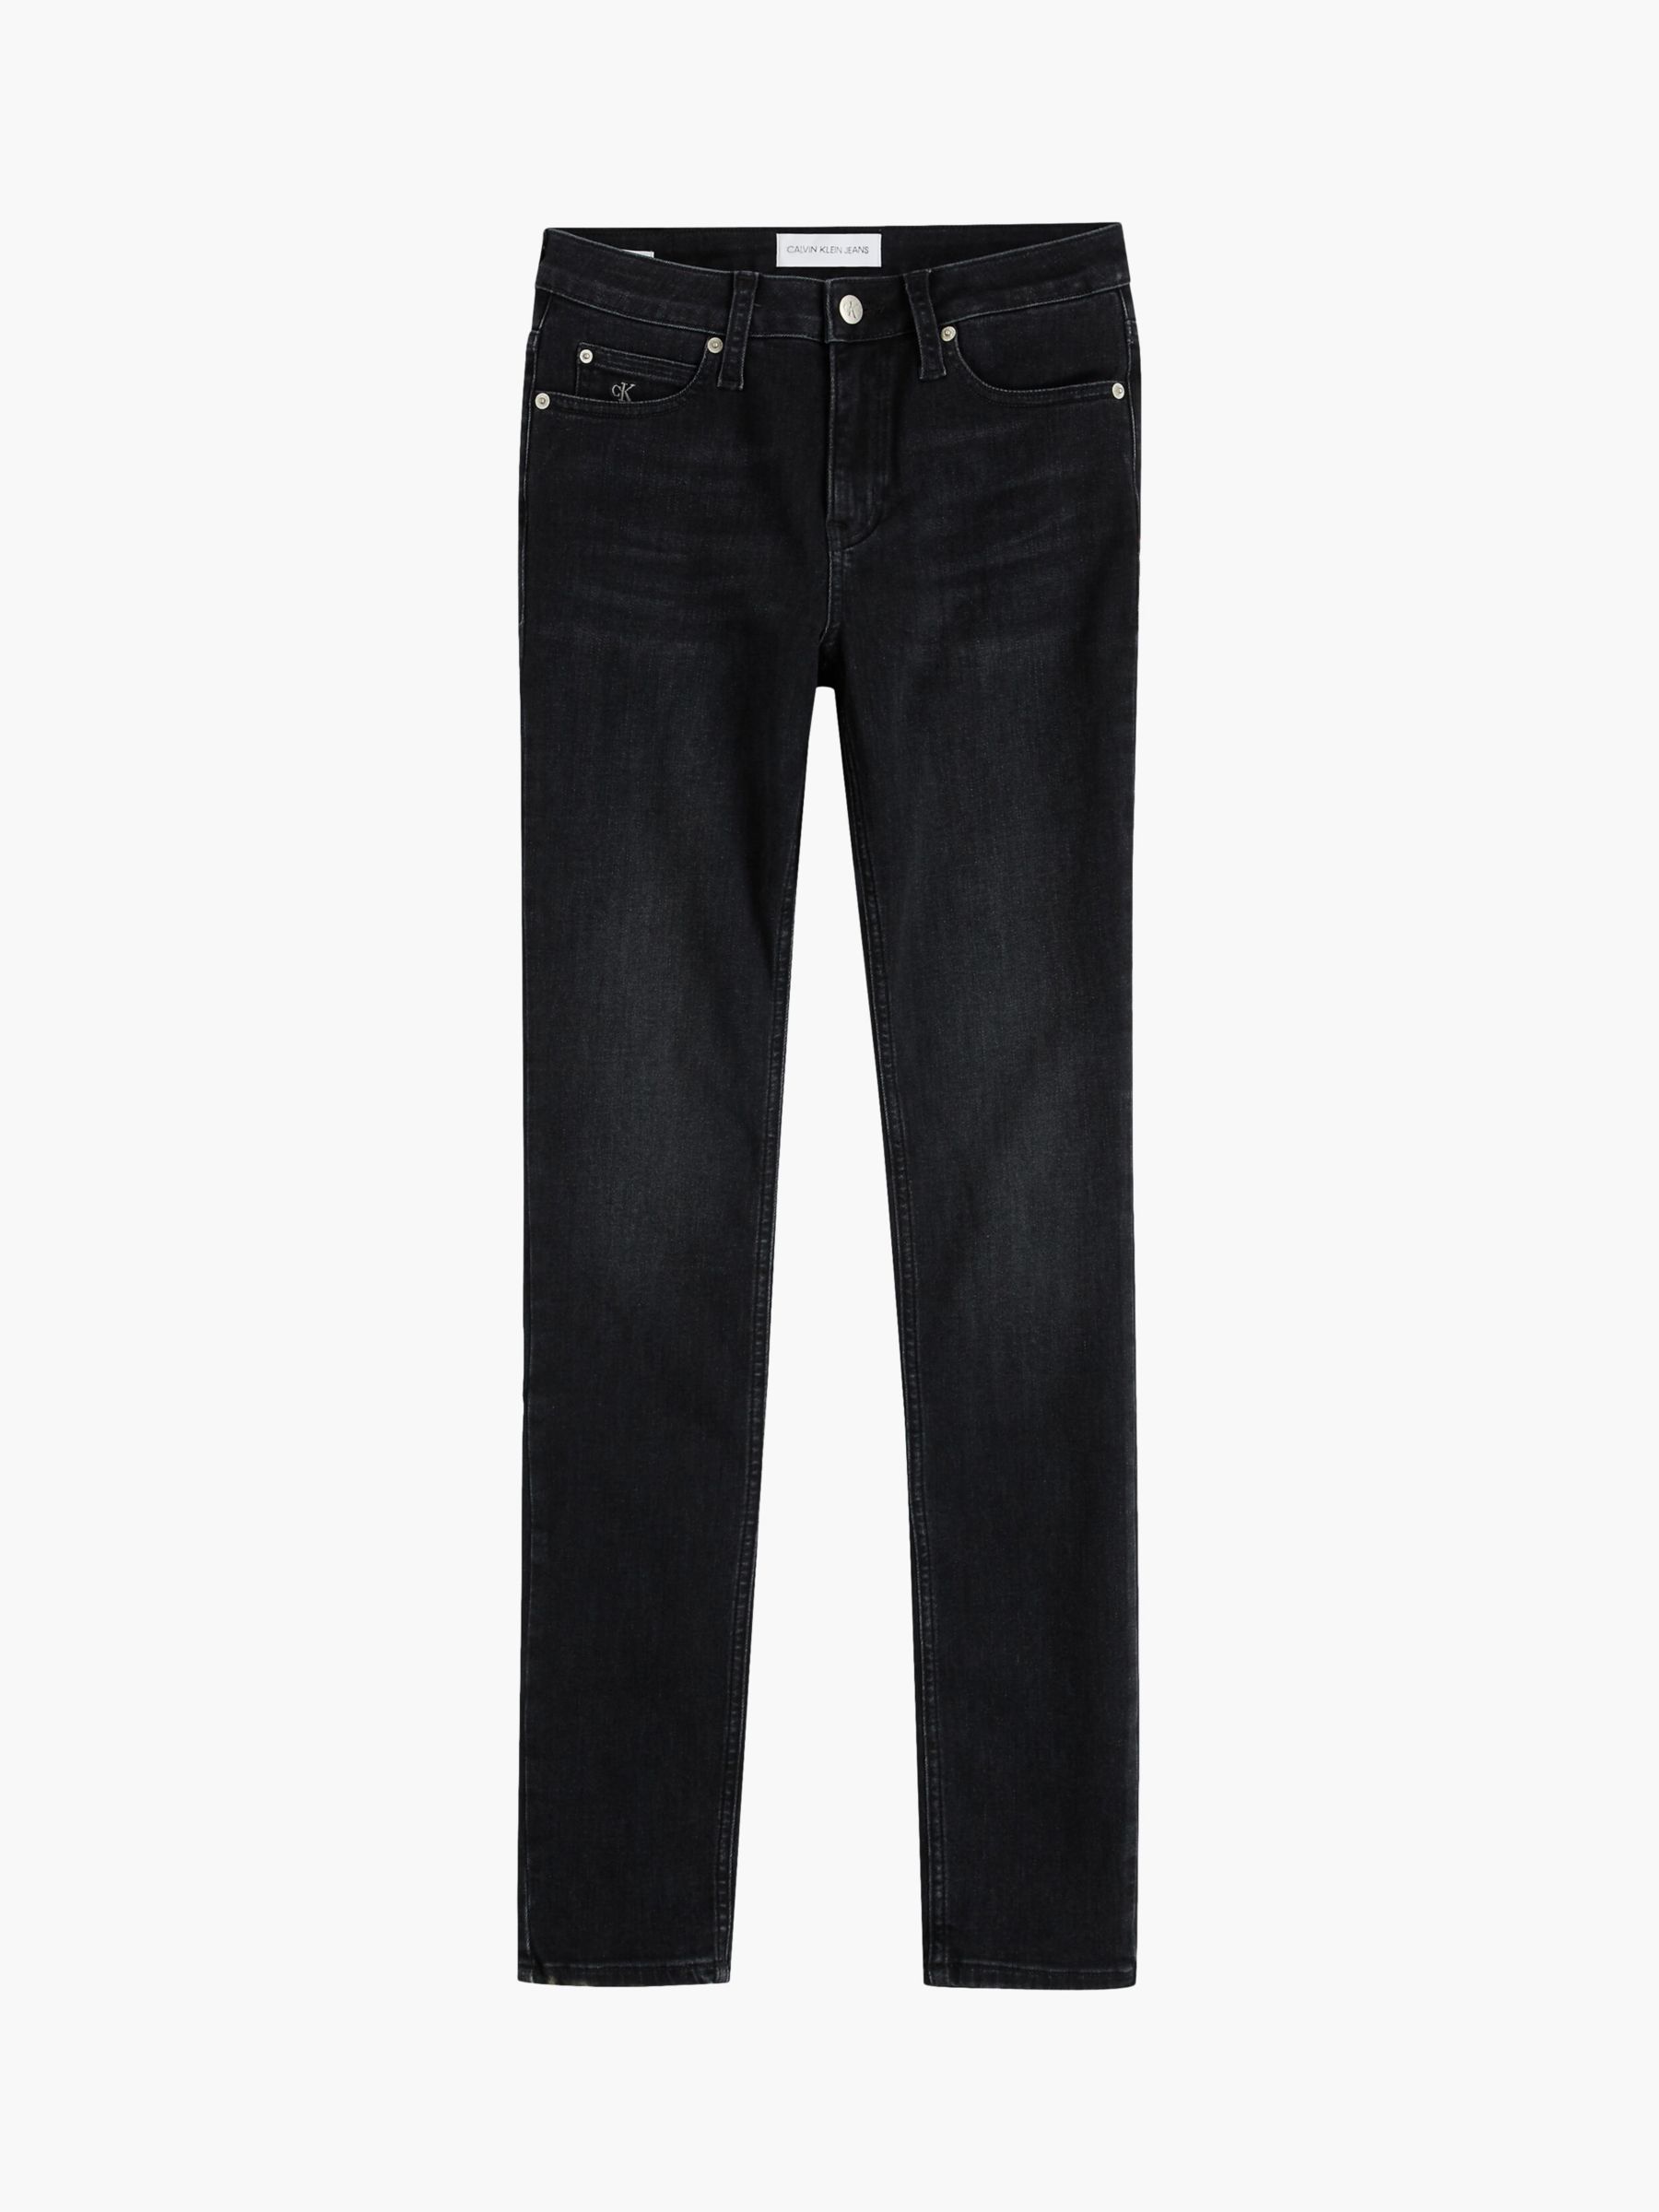 Buy Calvin Klein Mid Rise Skinny Jeans Online at johnlewis.com